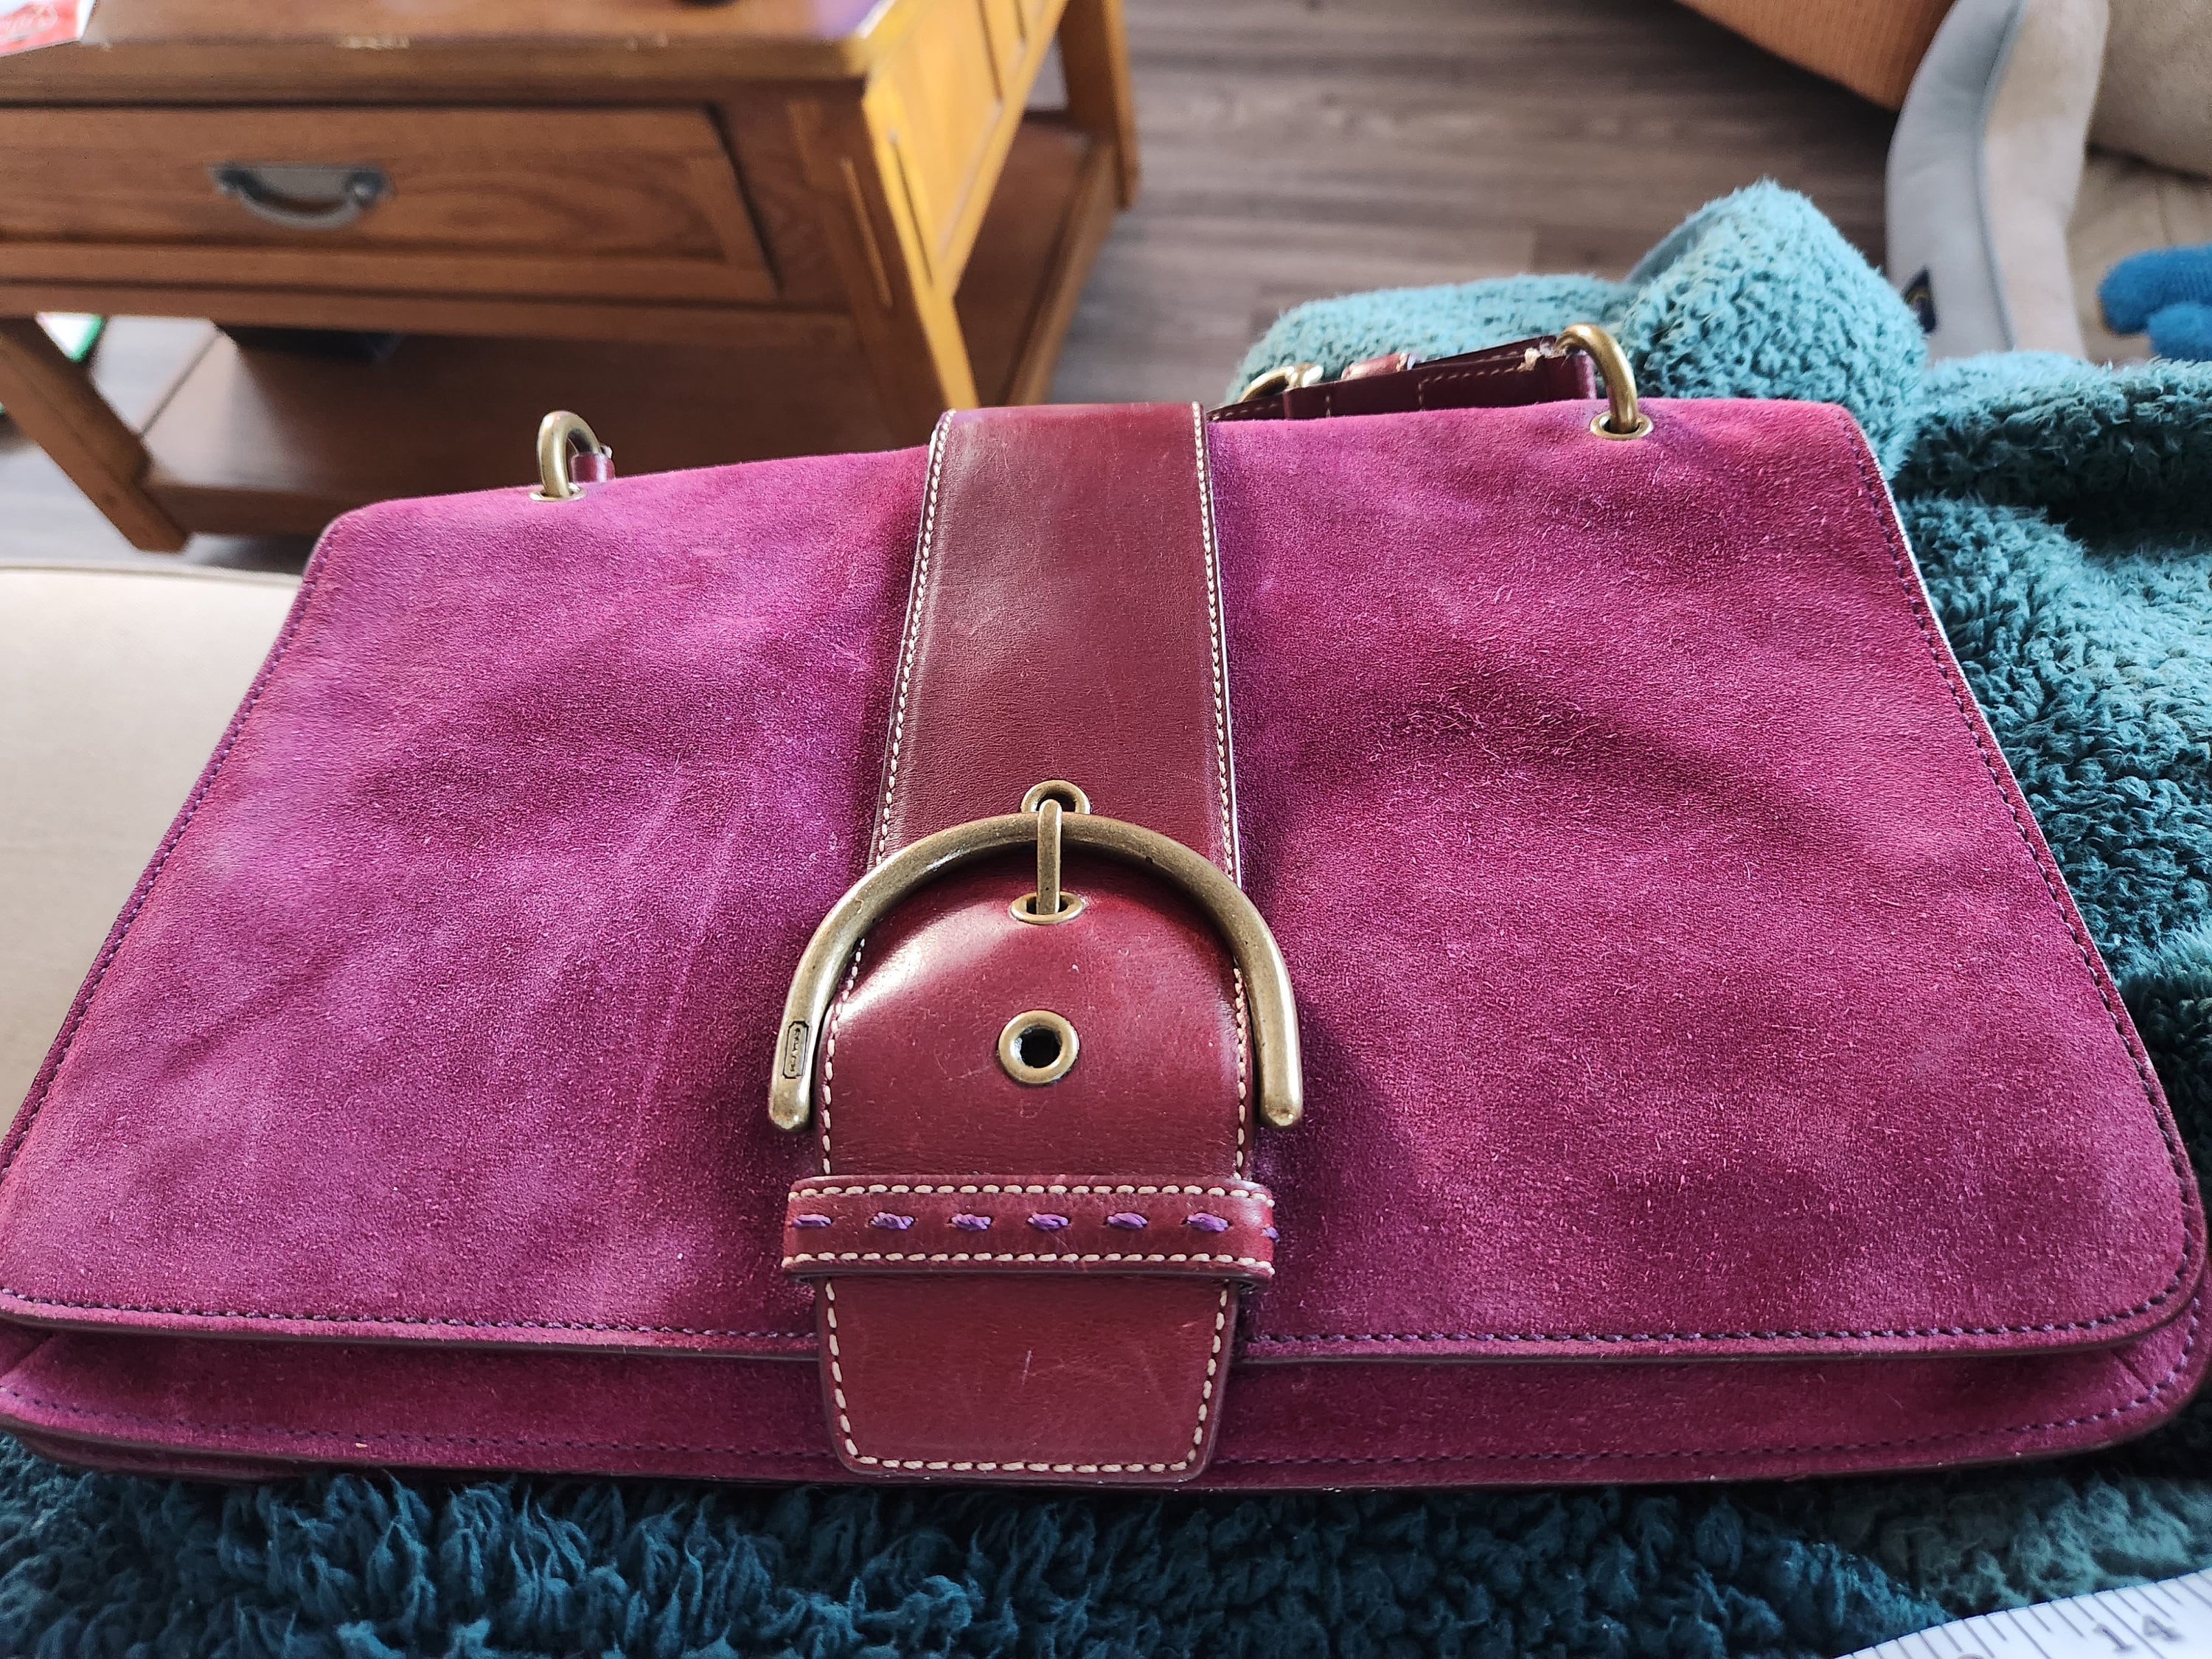 Free: Large Coach purse in purple - Handbags - Listia.com Auctions for Free  Stuff